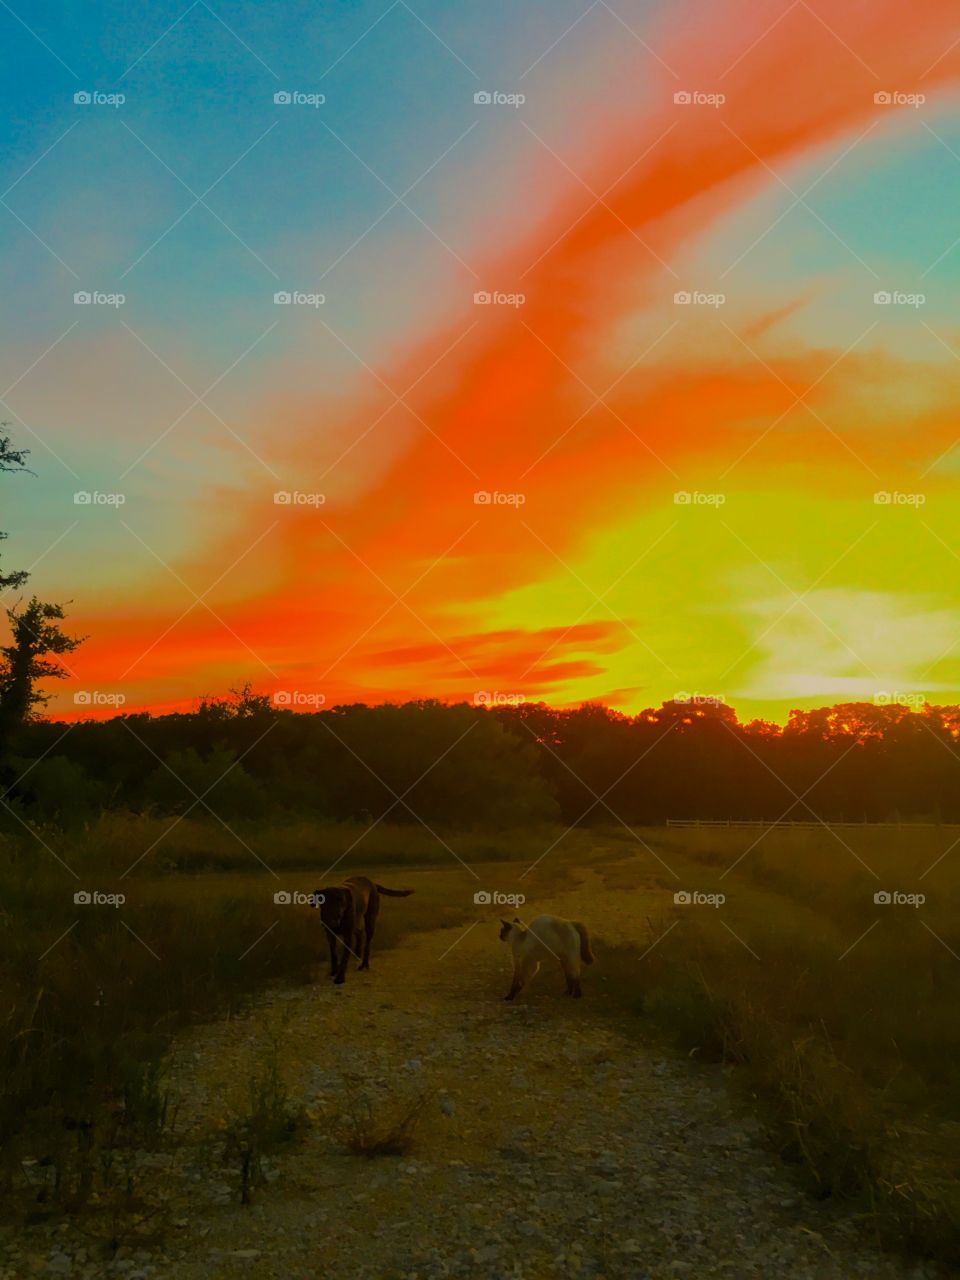 Animal sunset 